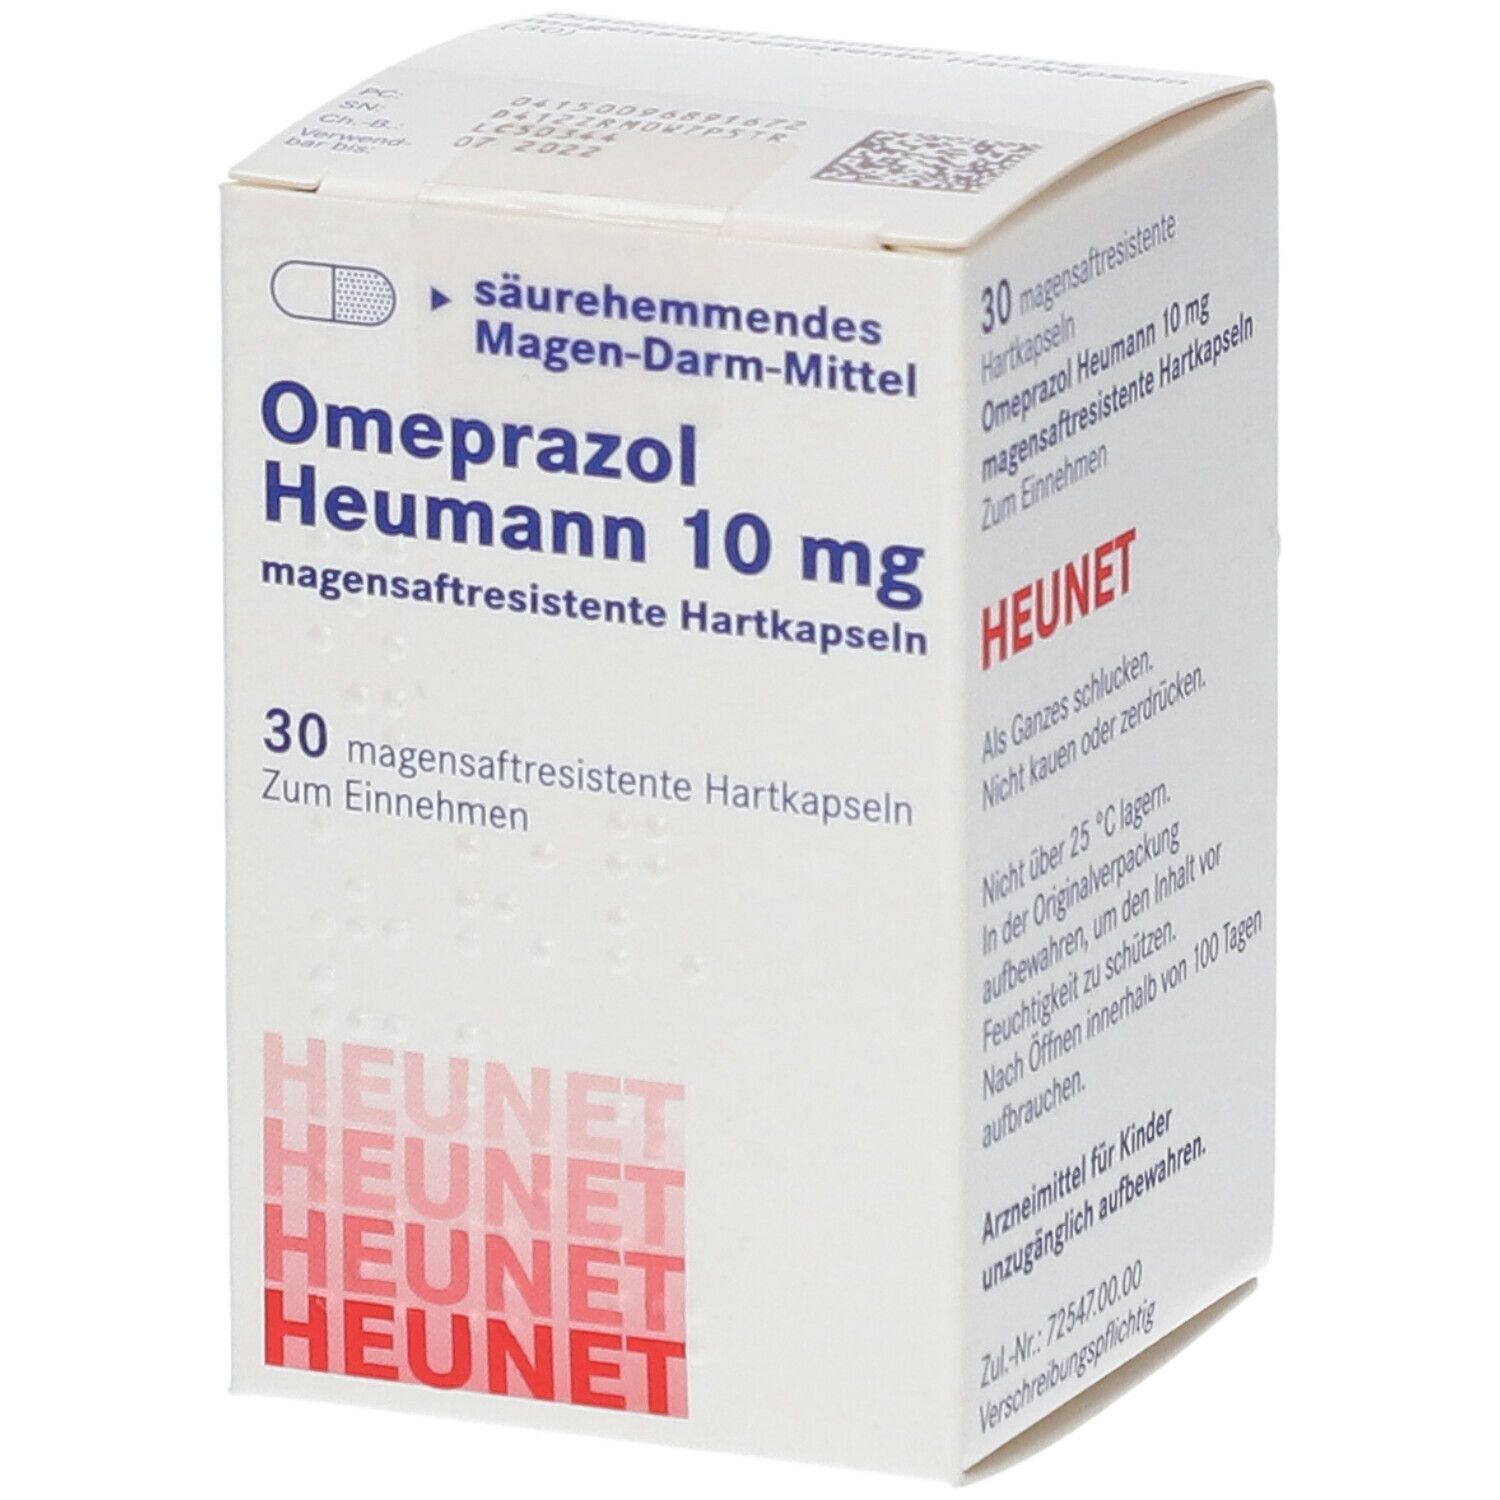 Omeprazol Heumann 10 mg